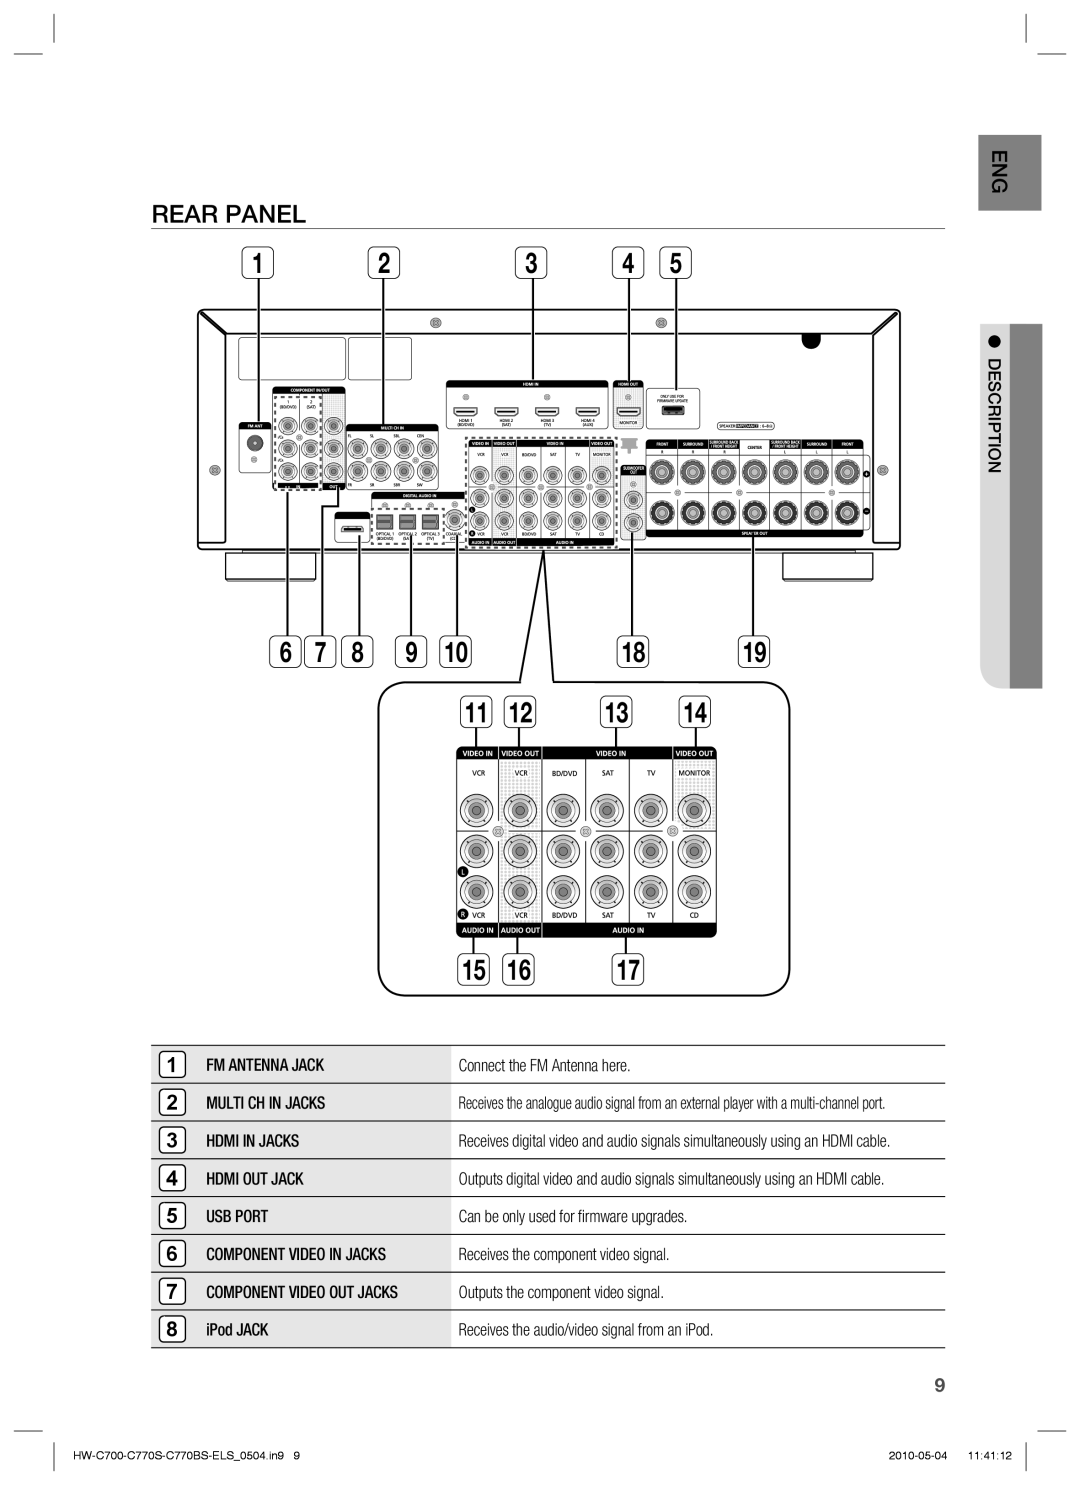 Samsung HW-C770S/XEN, HW-C700B/XEN, HW-C700/XEN, HW-C700/EDC, HW-C770S/EDC, HW-C770S/XEE Rear Panel, Component Video In Jacks 